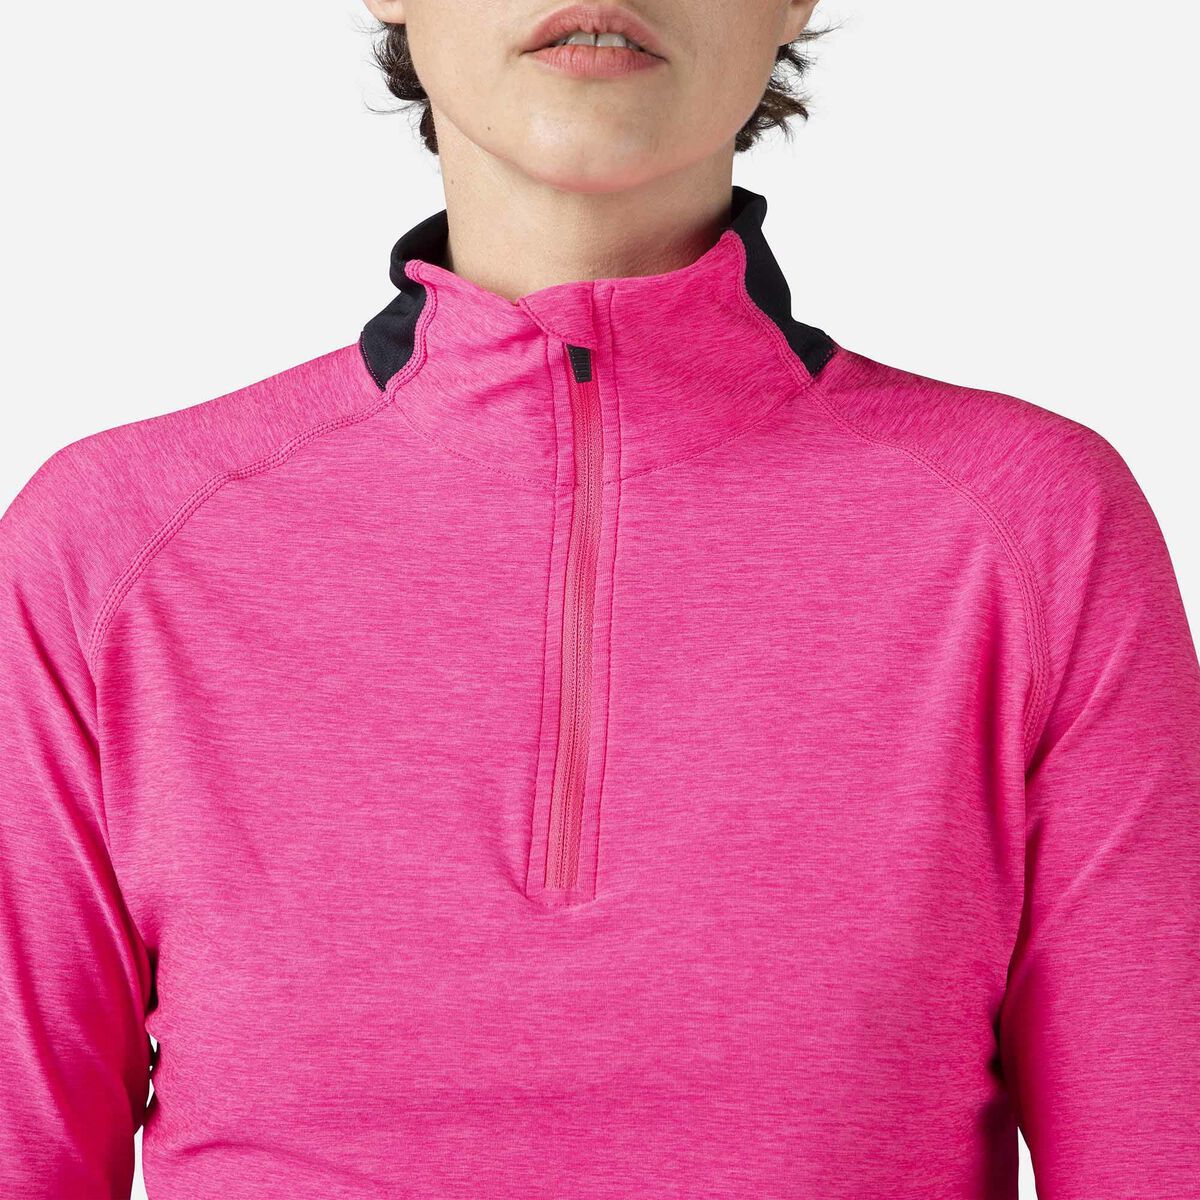 Rossignol Women's Melange Half-Zip Hiking Pullover pinkpurple